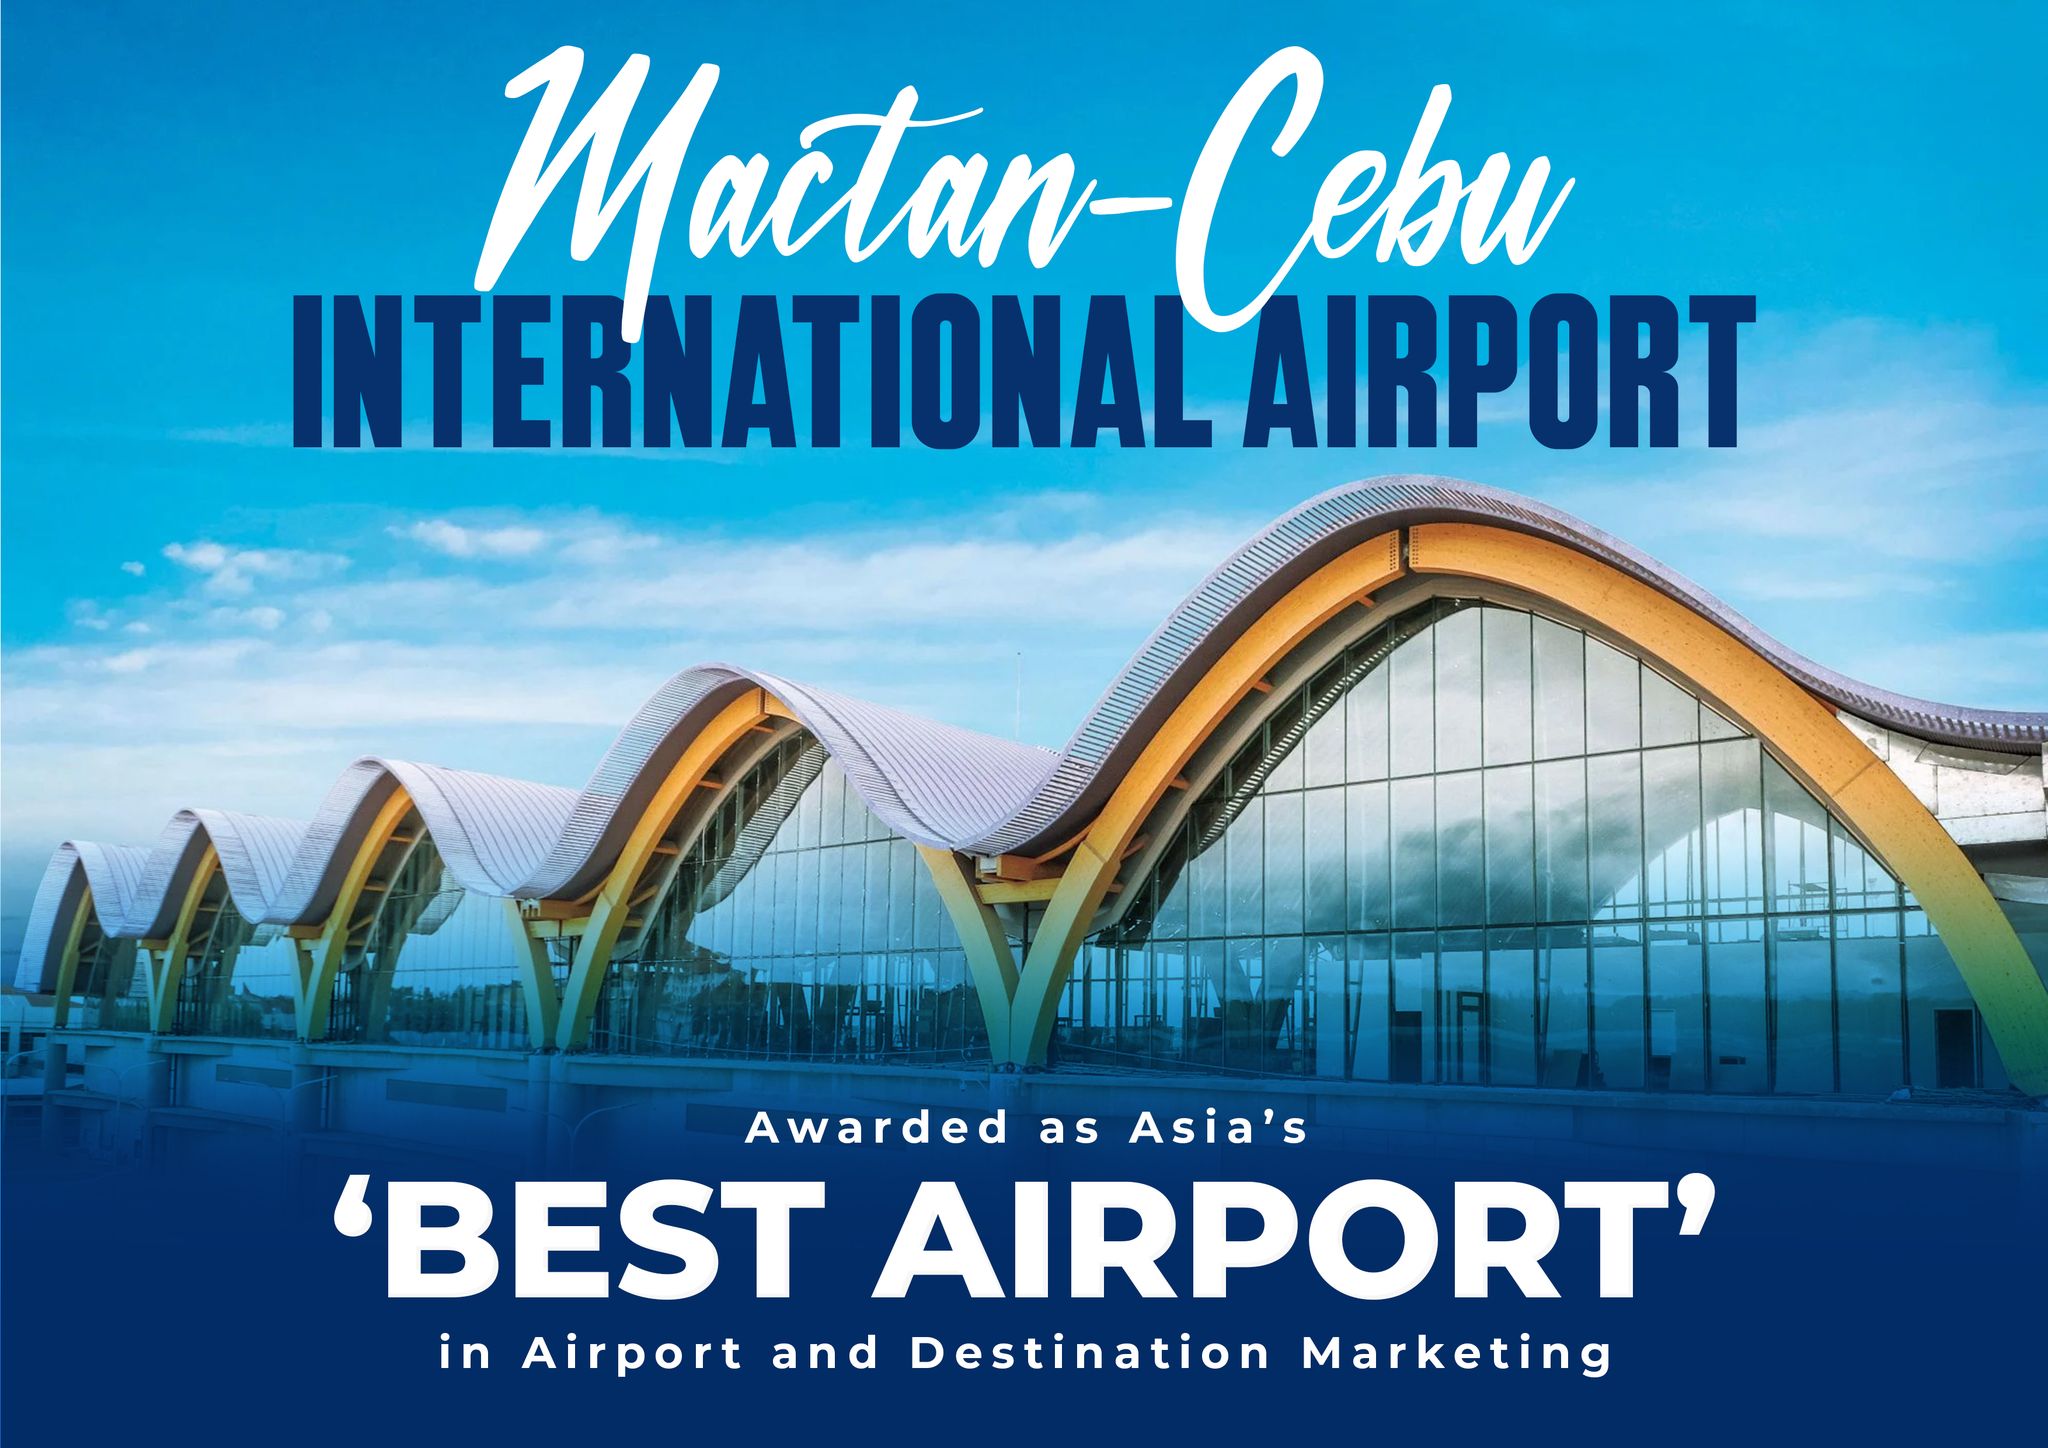 Image Posted for Mactan-Cebu International Airport